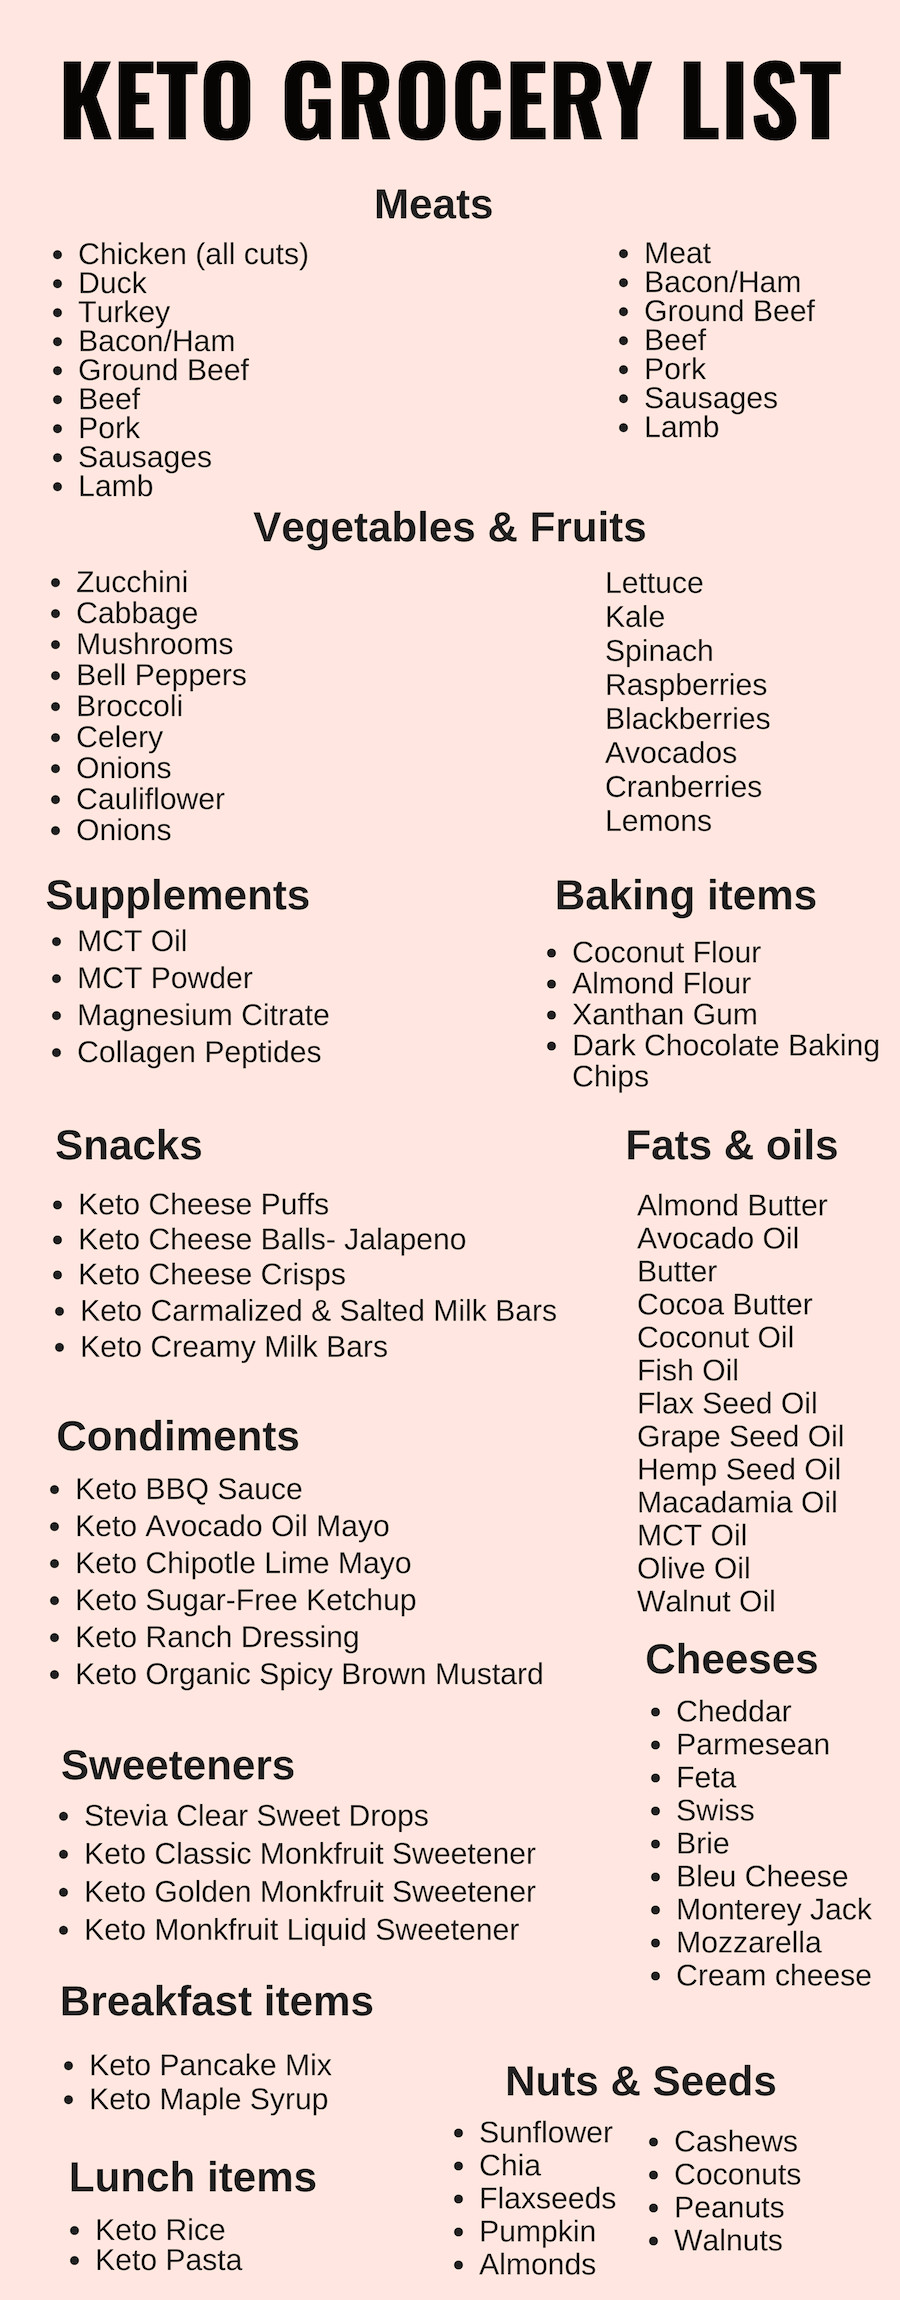 Keto For Beginners Shopping List Keto Grocery List For Beginners – Simple Grocery List